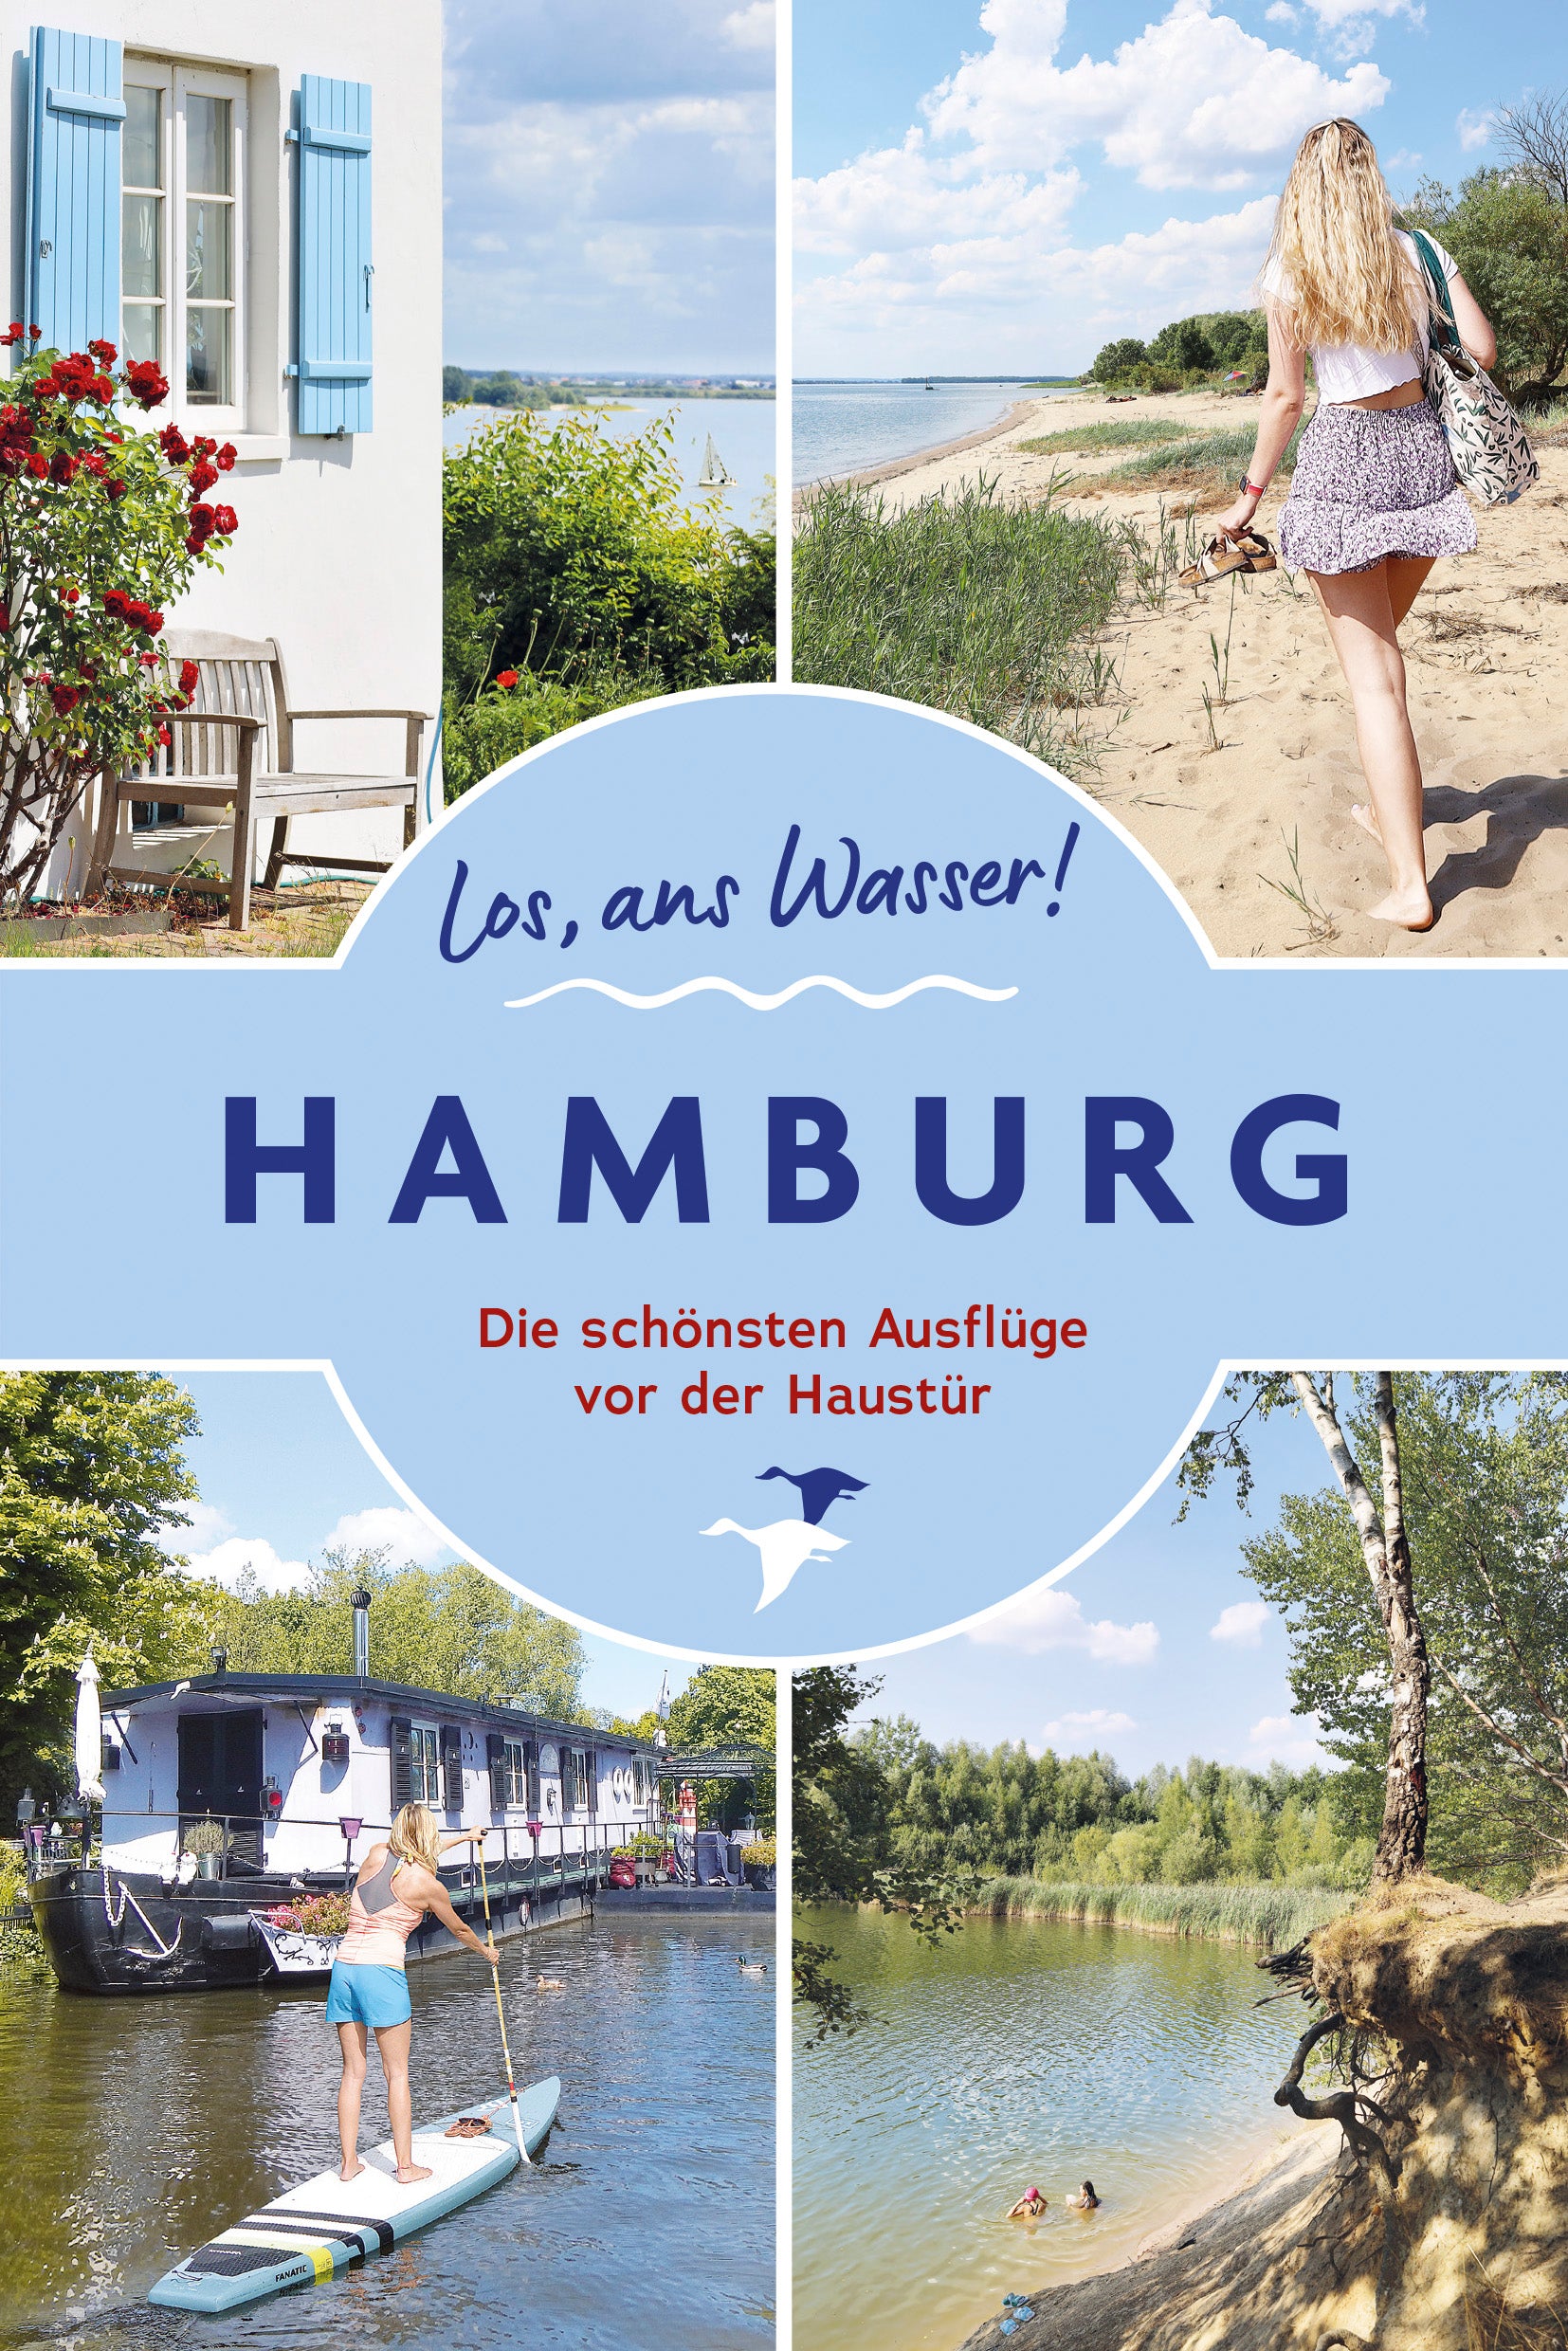 Los, ans Wasser! Hamburg -